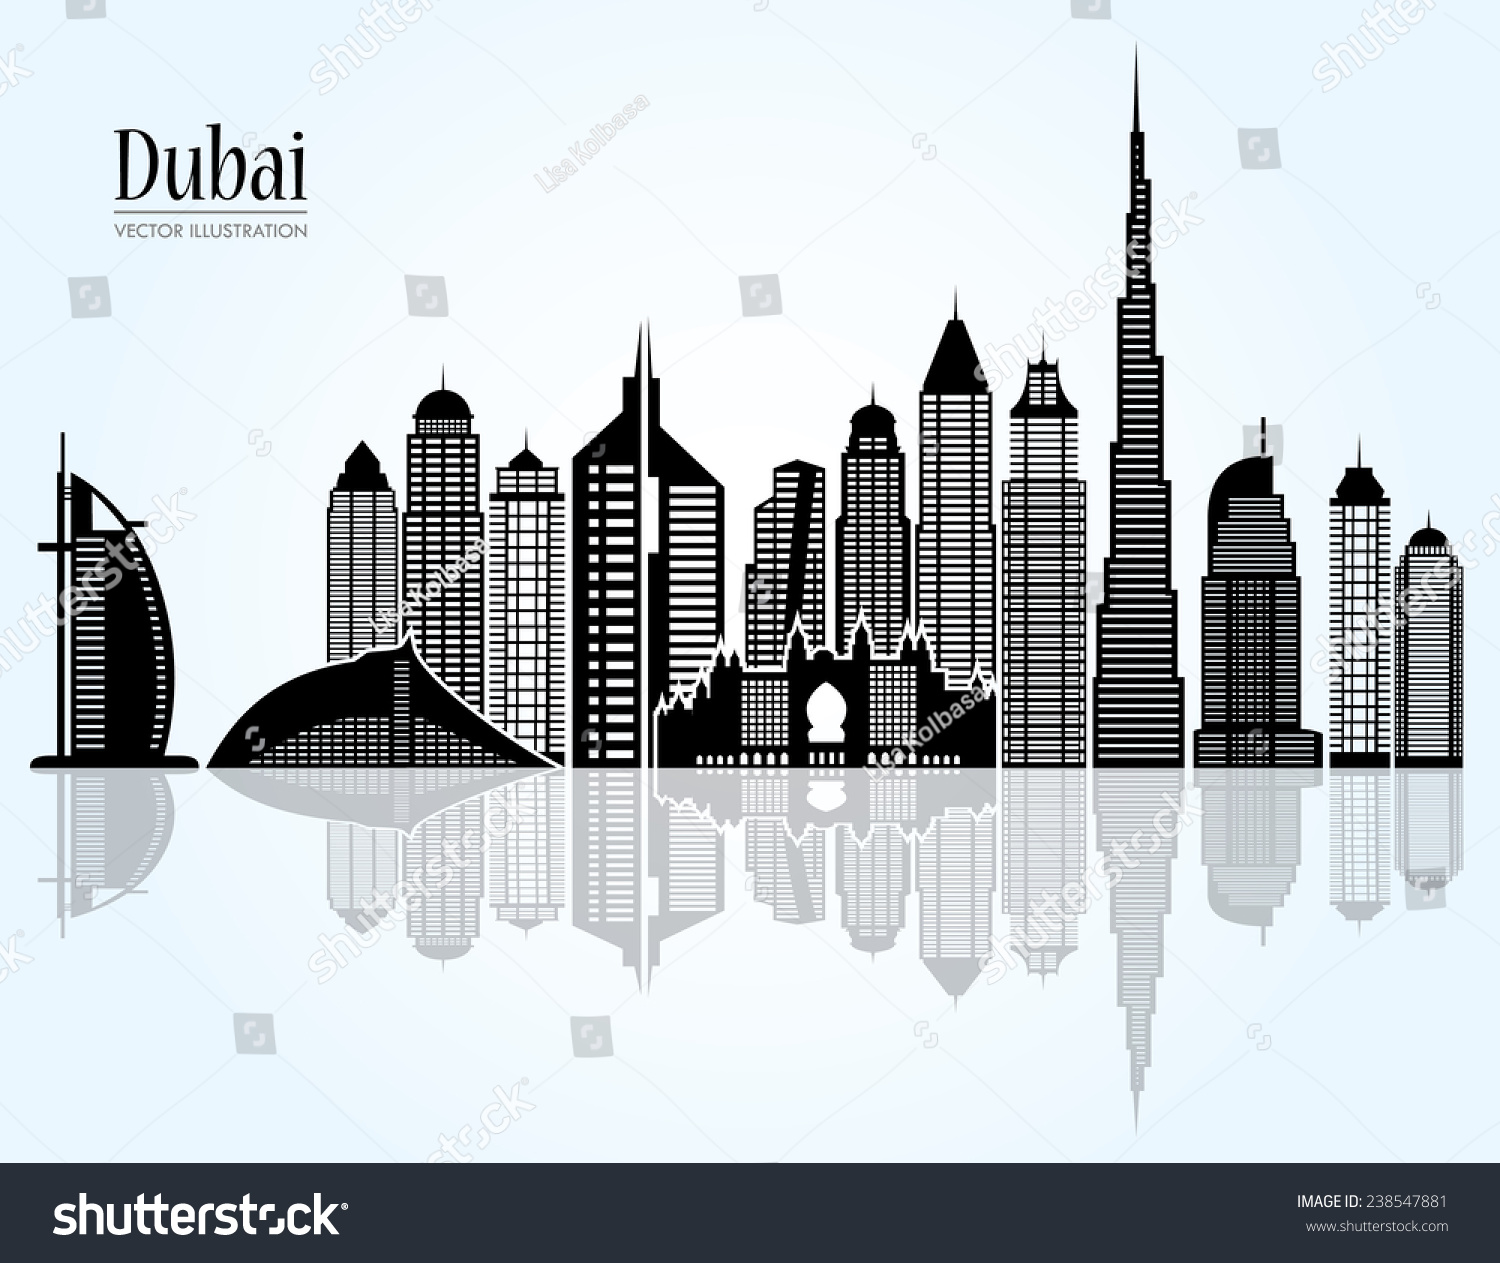 Dubai City Skyline Detailed Silhouette. Vector Illustration - 238547881 ...